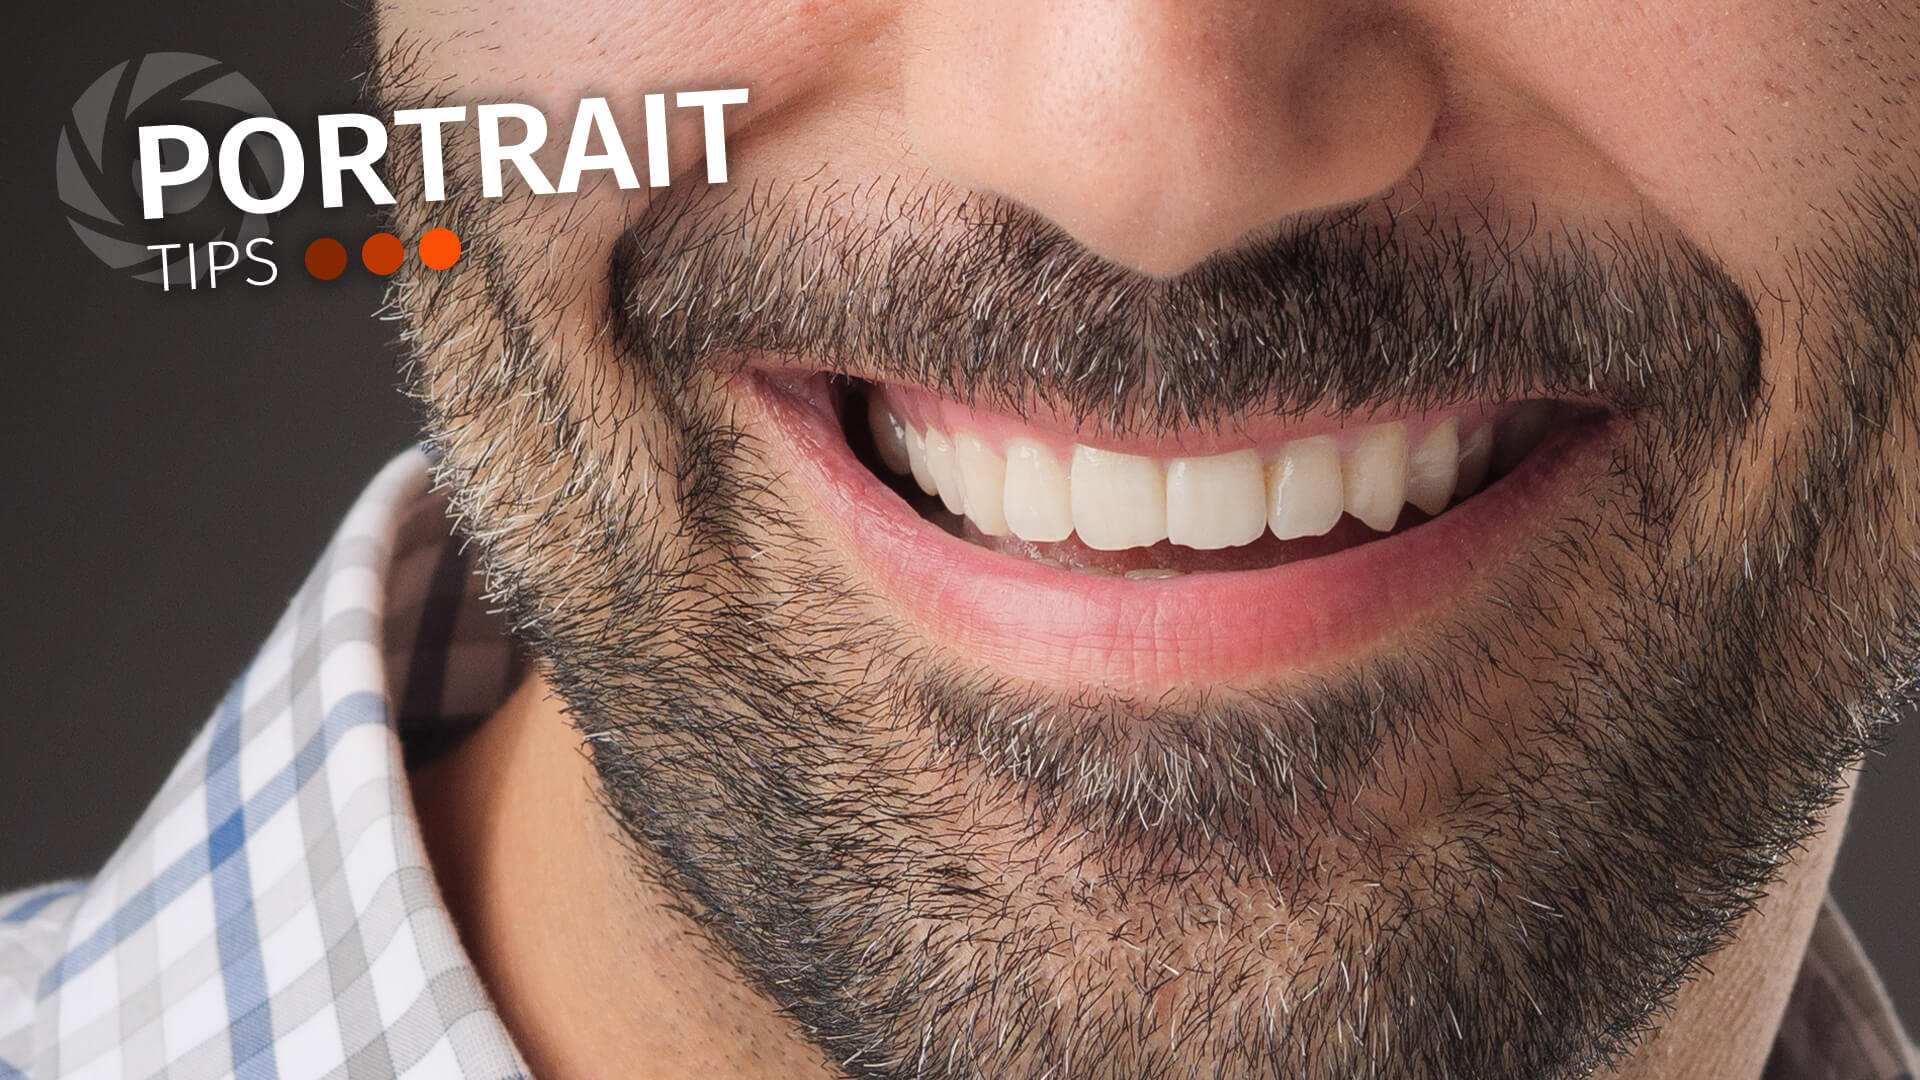 Portrait Tips: Teeth whitening in Lightroom (easy does it!)